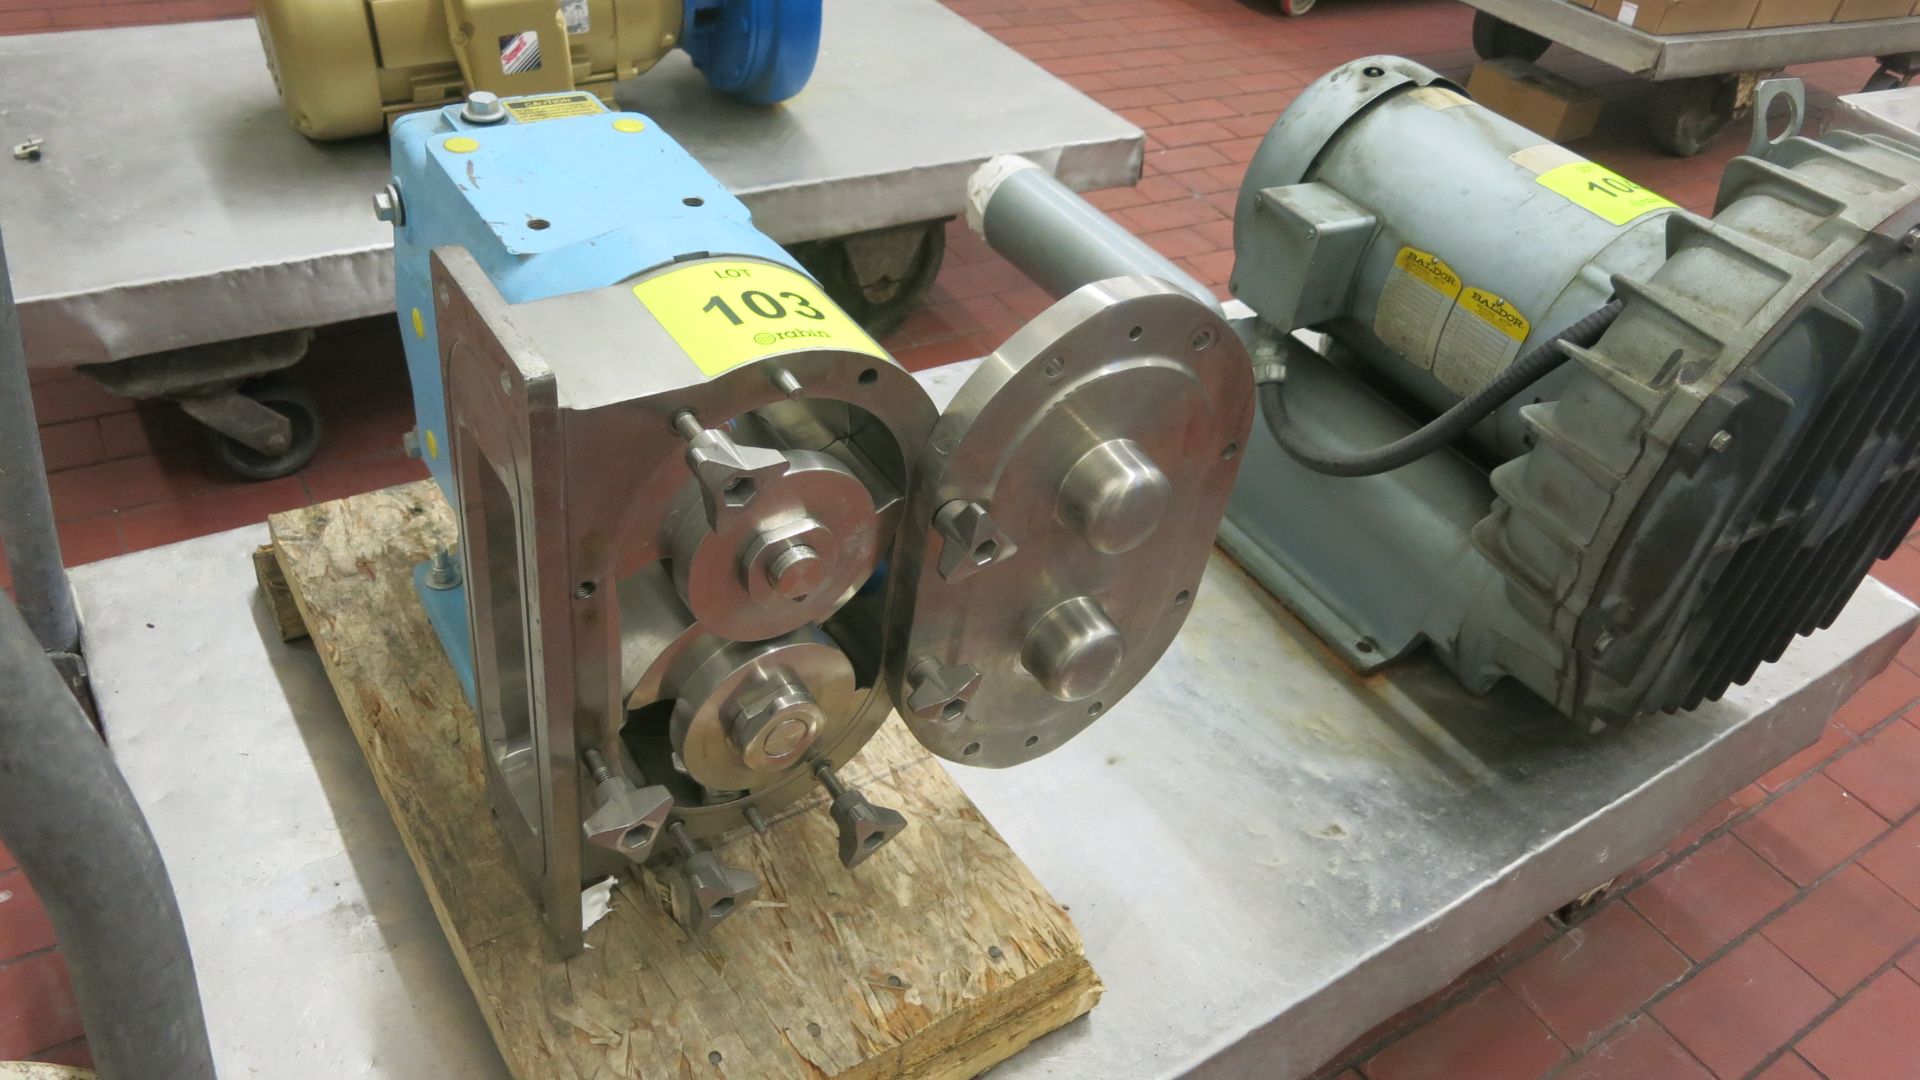 Waukesha positive rotary pump, model 134, s/n 282282-01, no drive motor